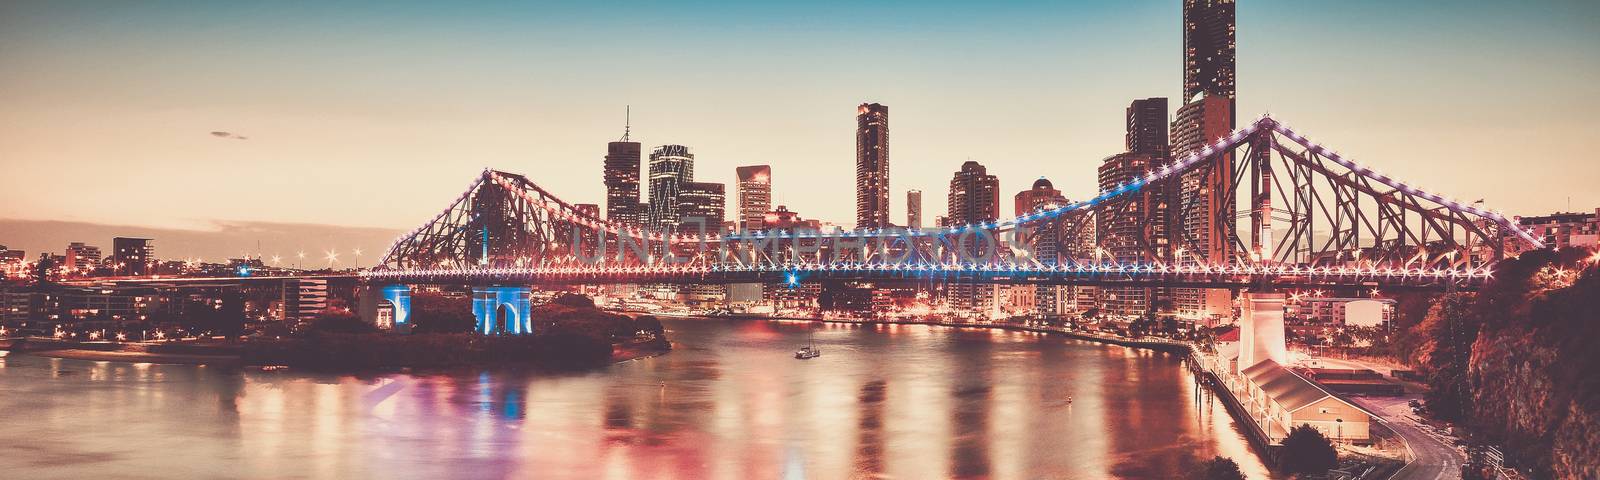 Iconic Story Bridge in Brisbane, Queensland, Australia. by artistrobd